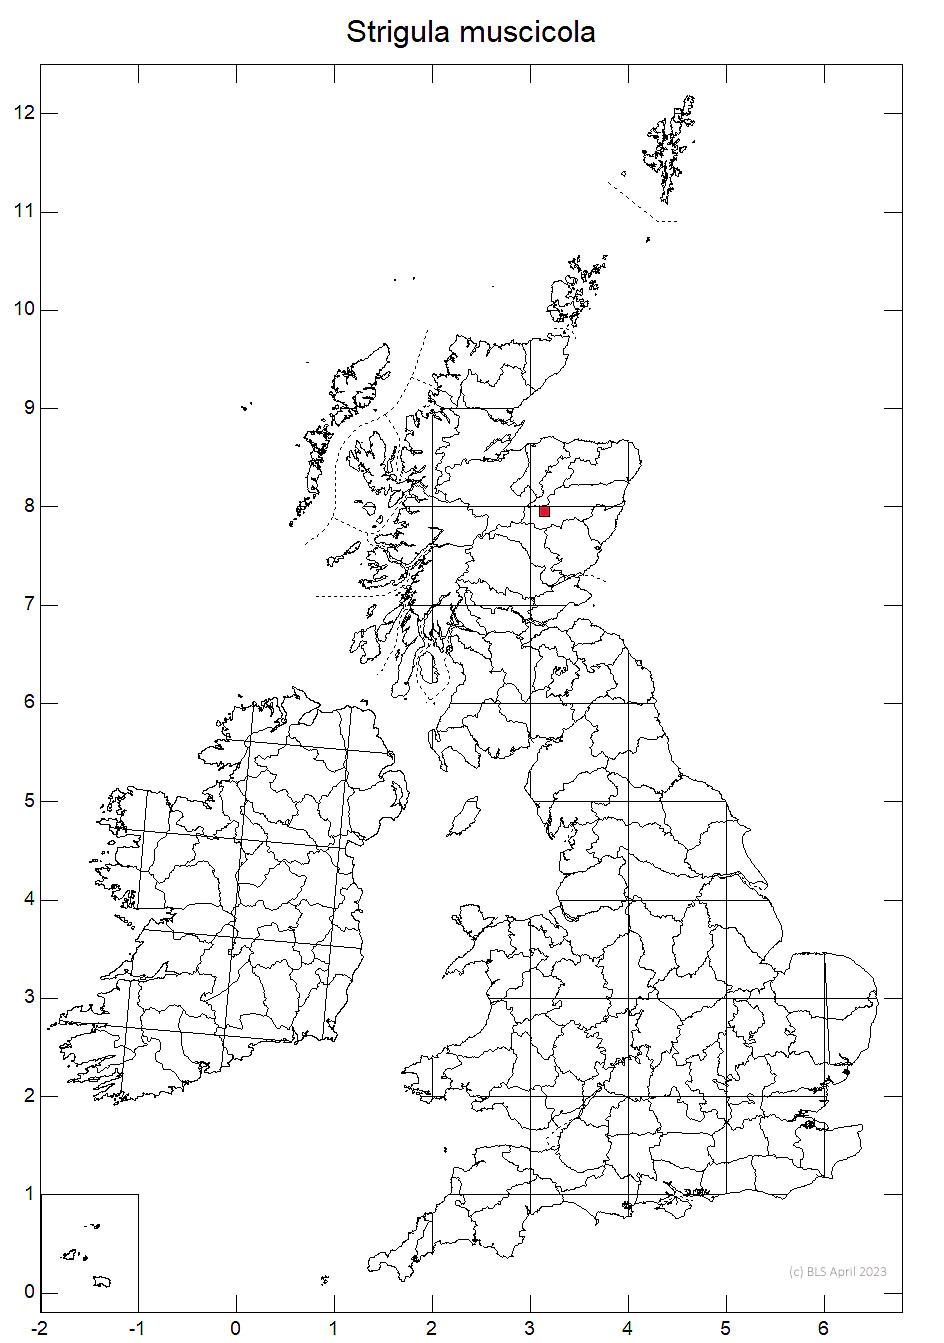 Strigula muscicola 10km sq distribution map